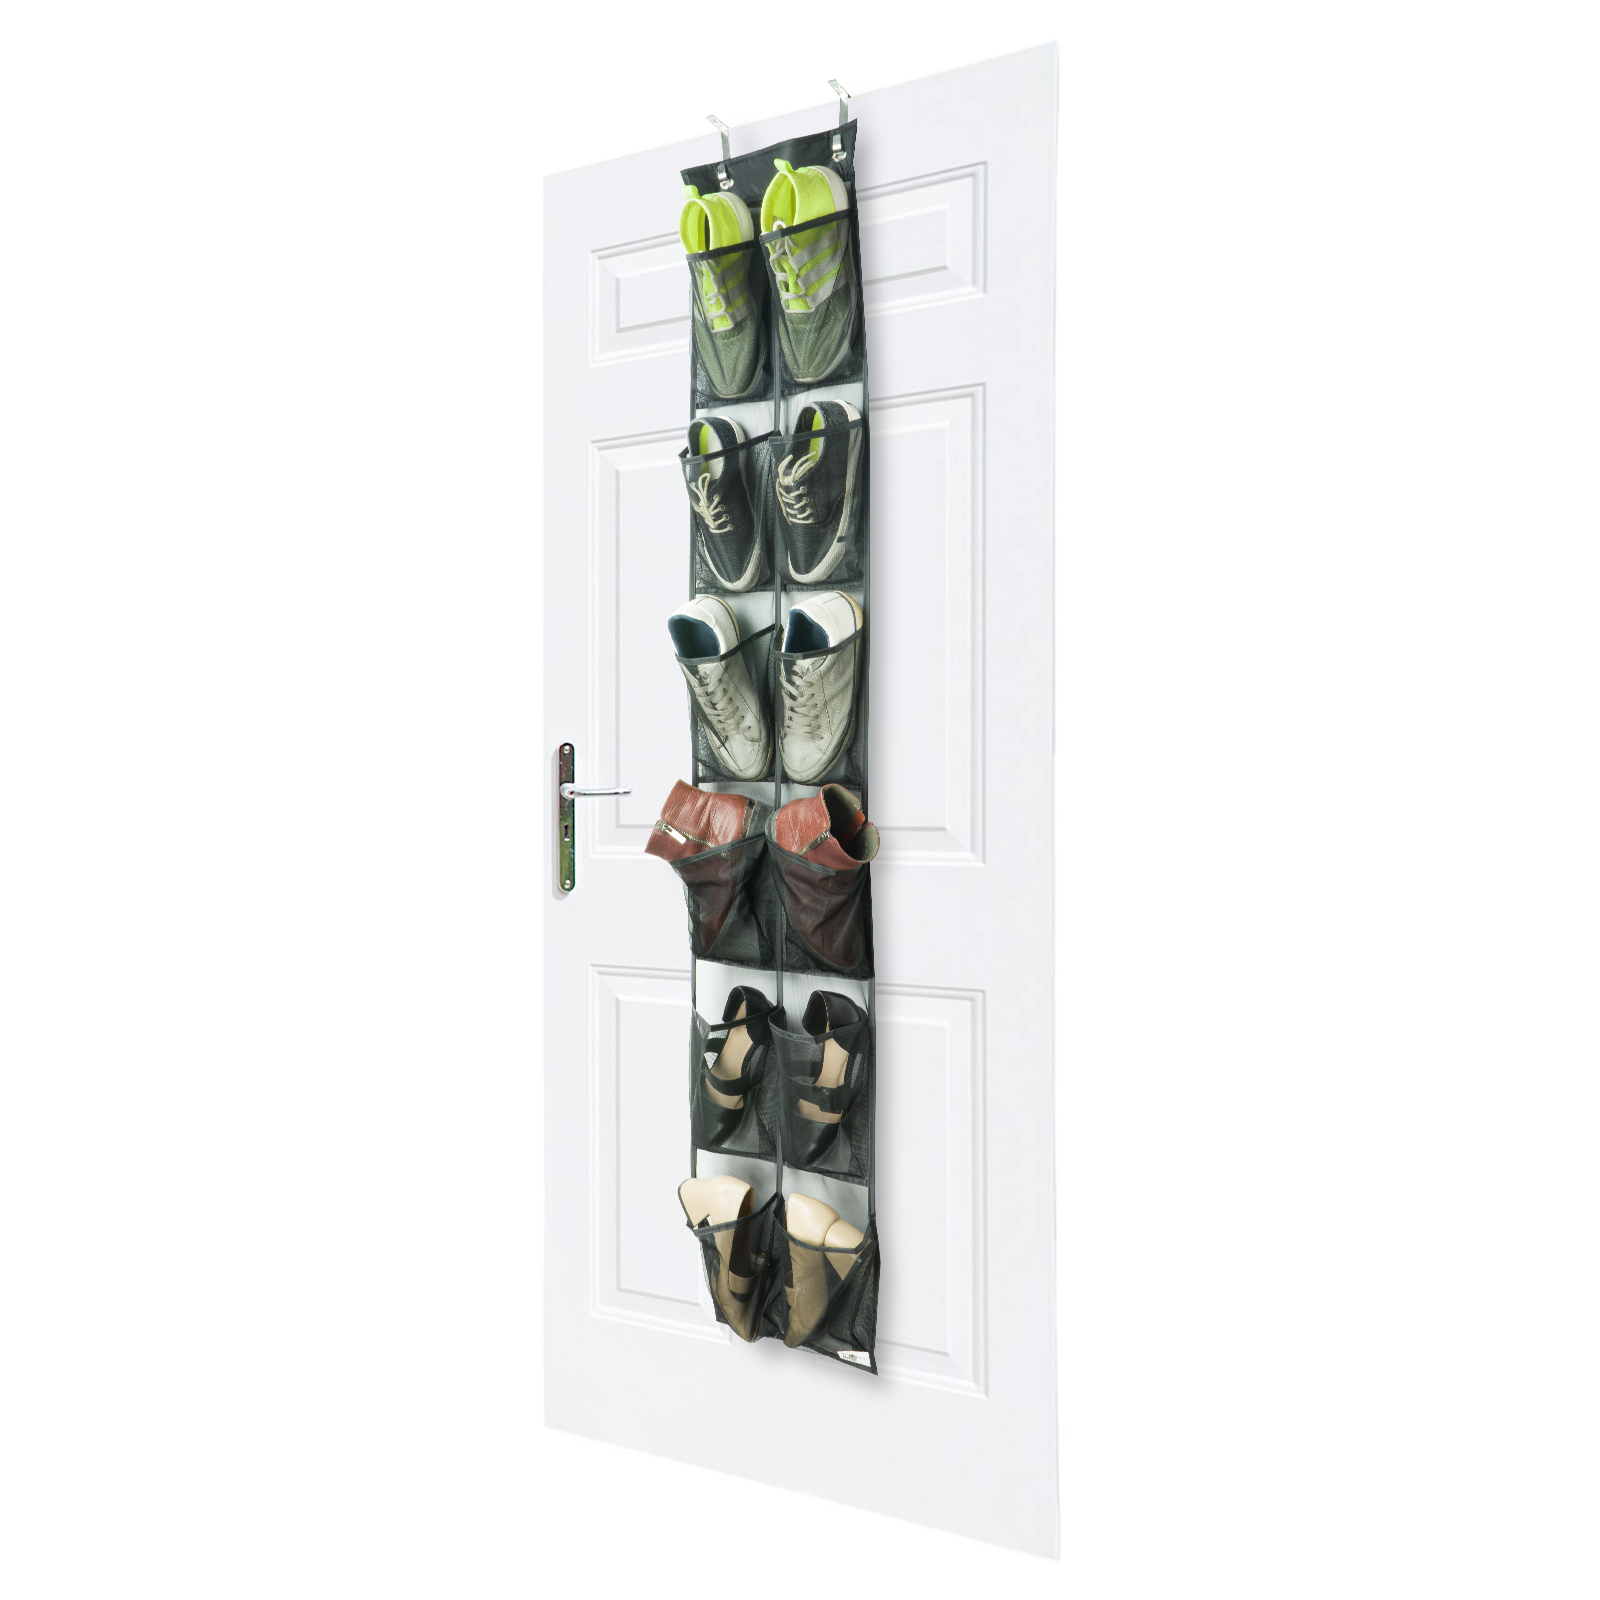 Apalus Over The Door Shoe Organizer, Door-Mounted Storage, Sneakers, Sandals Rack with Mesh Pockets for Easy Storage with 2 Adjustable Door Hooks, Fits Most Door Types/Sizes (12 Pockets)